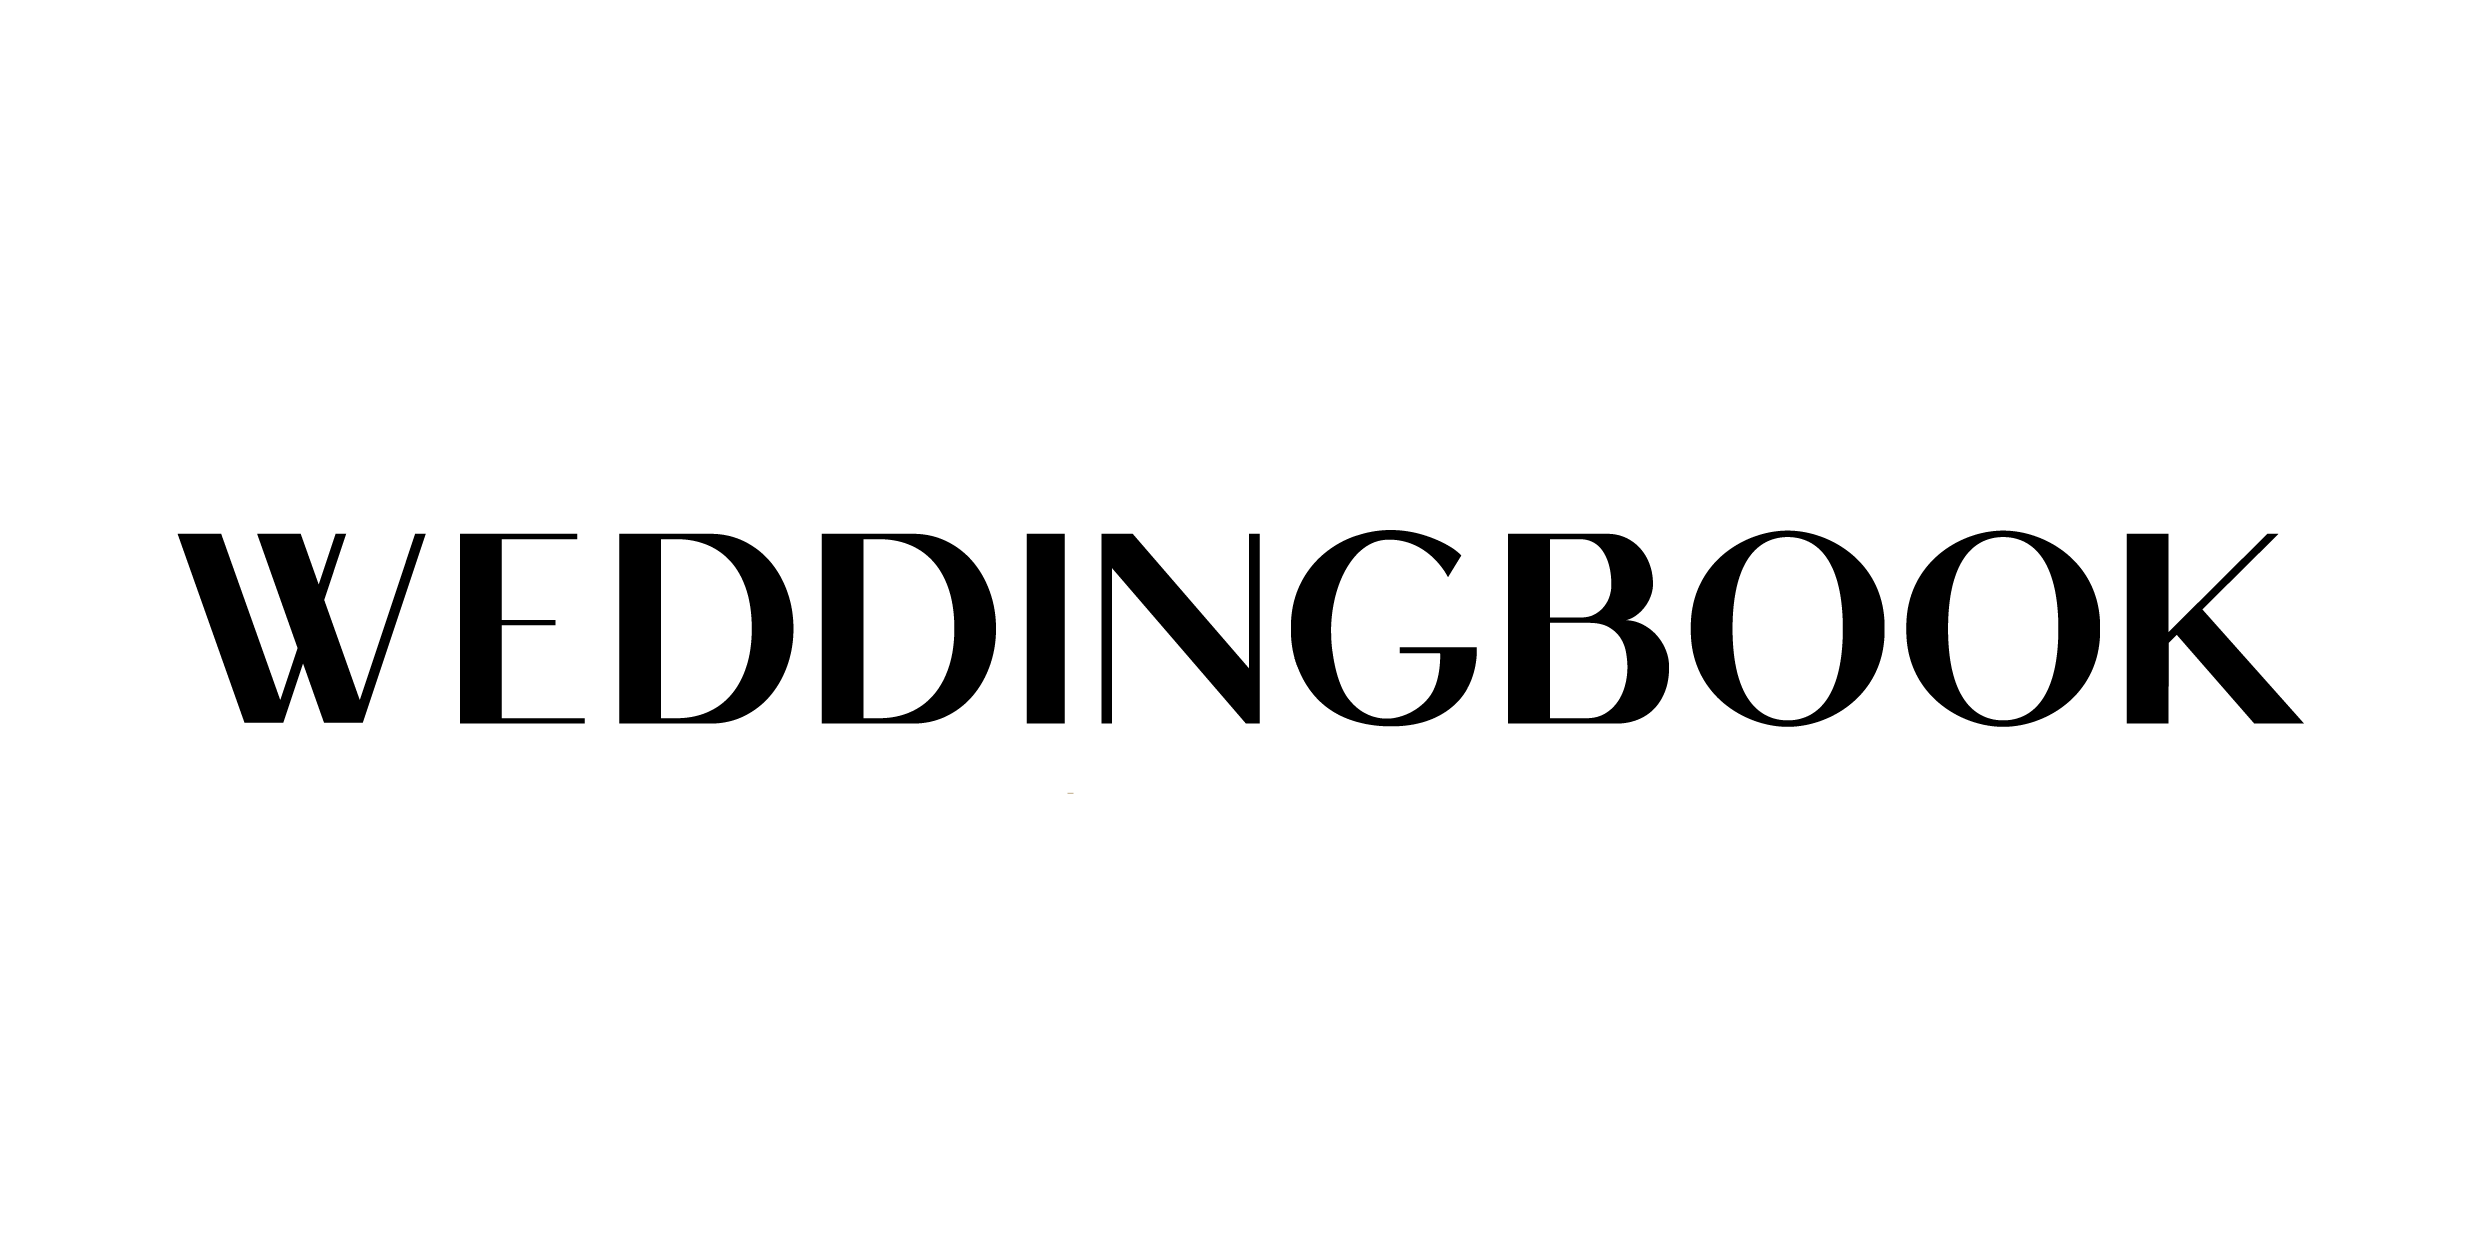 WEDDINGBOOK VIỆT NAM